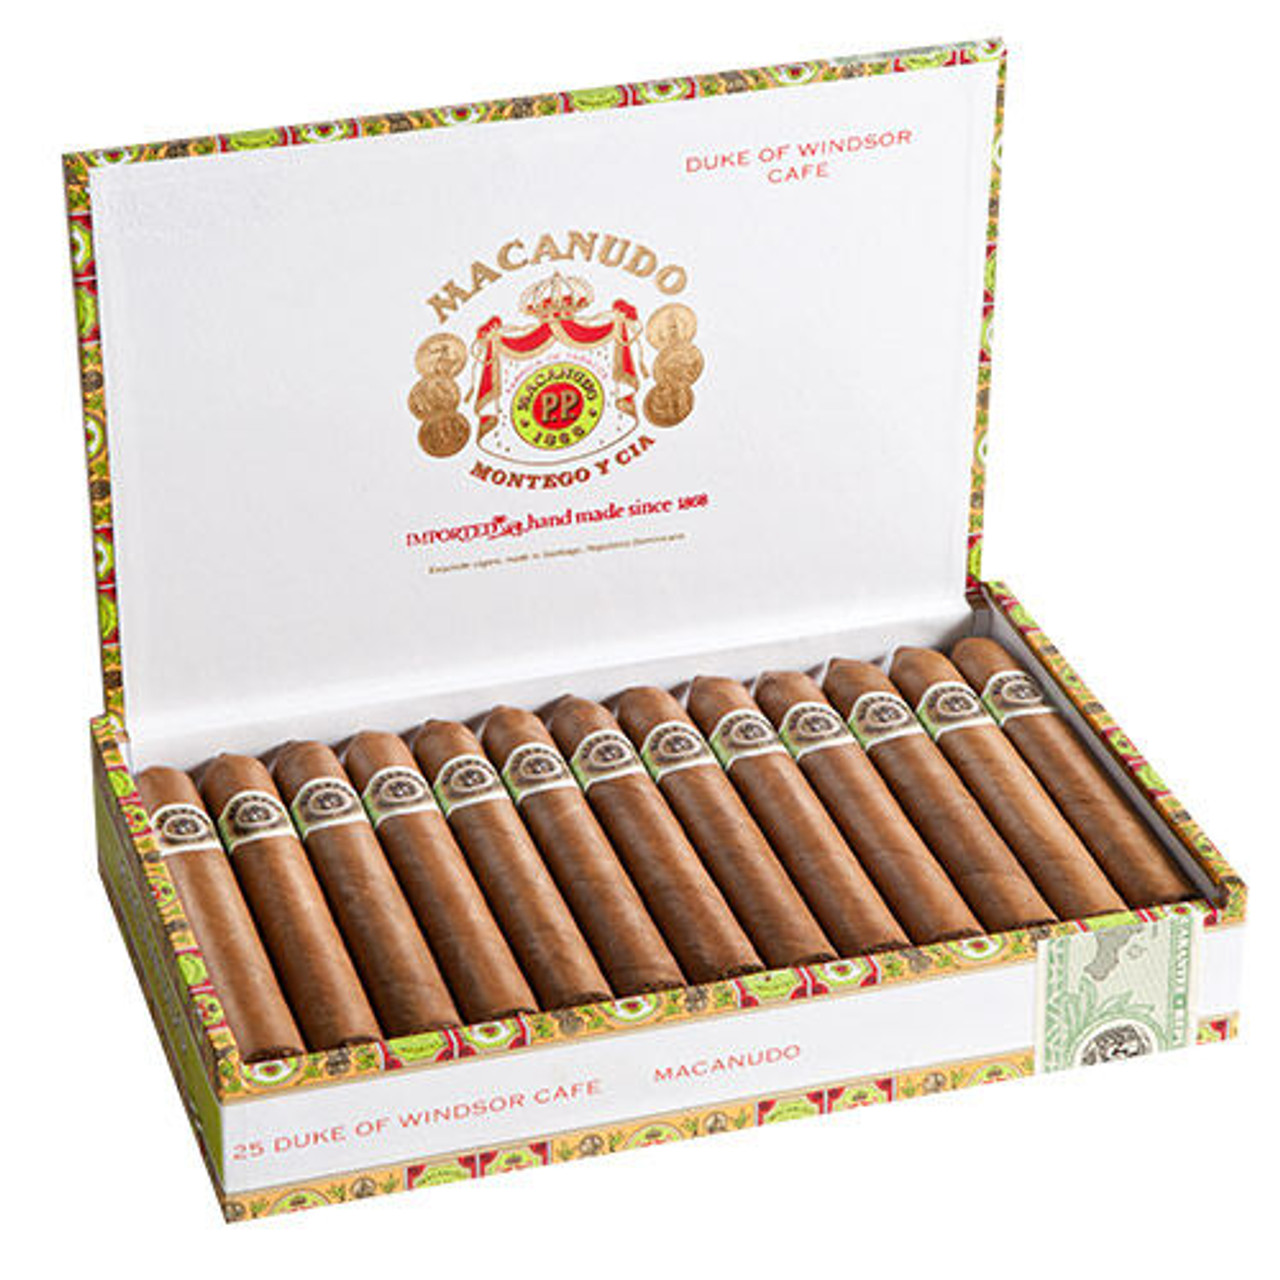 Macanudo Tudor Cigars - 6 x 52 (Box of 25) Open